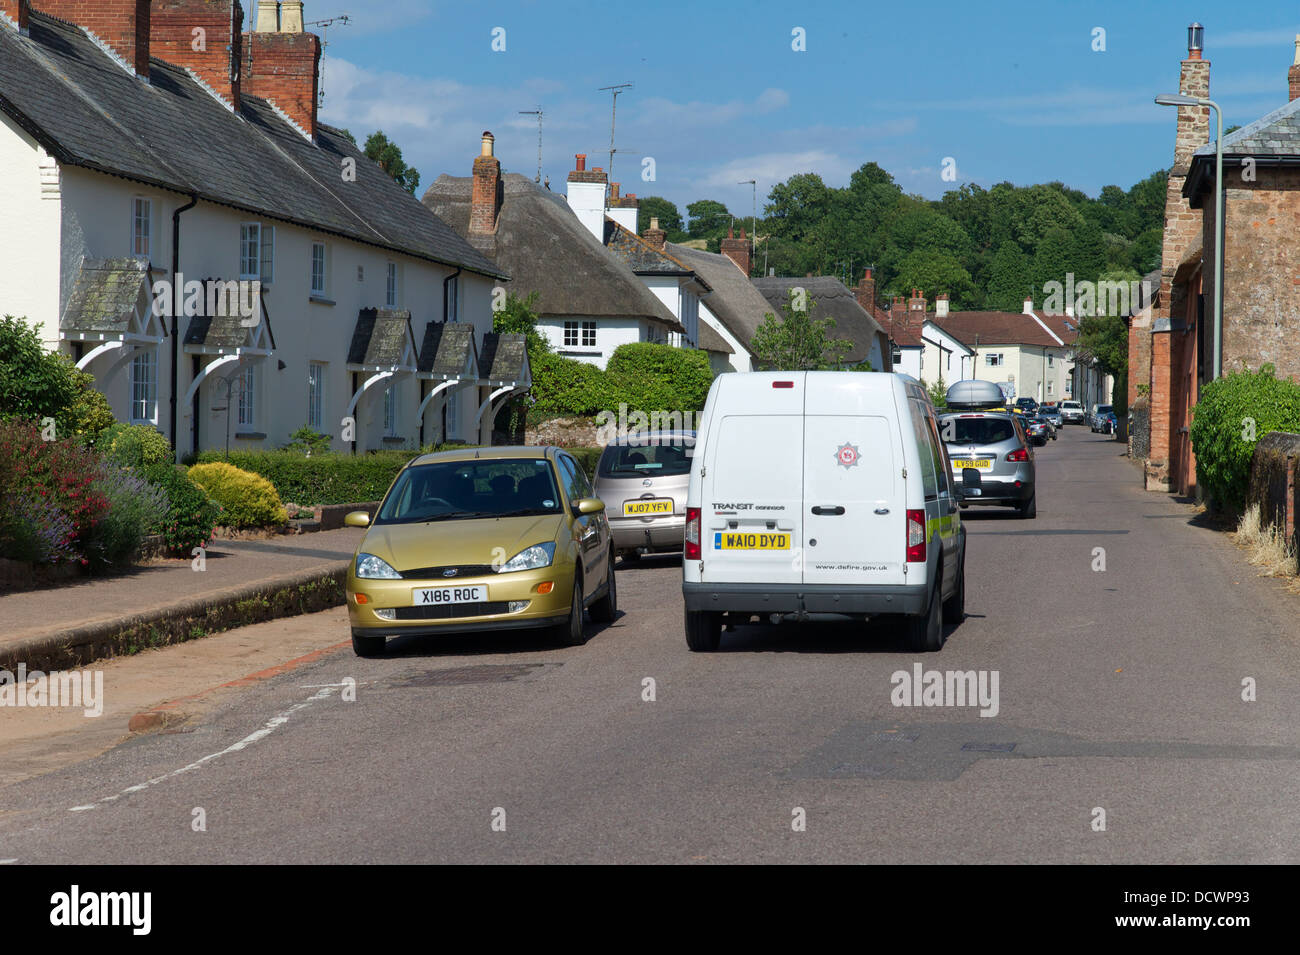 Traffic in village, UK Stock Photo